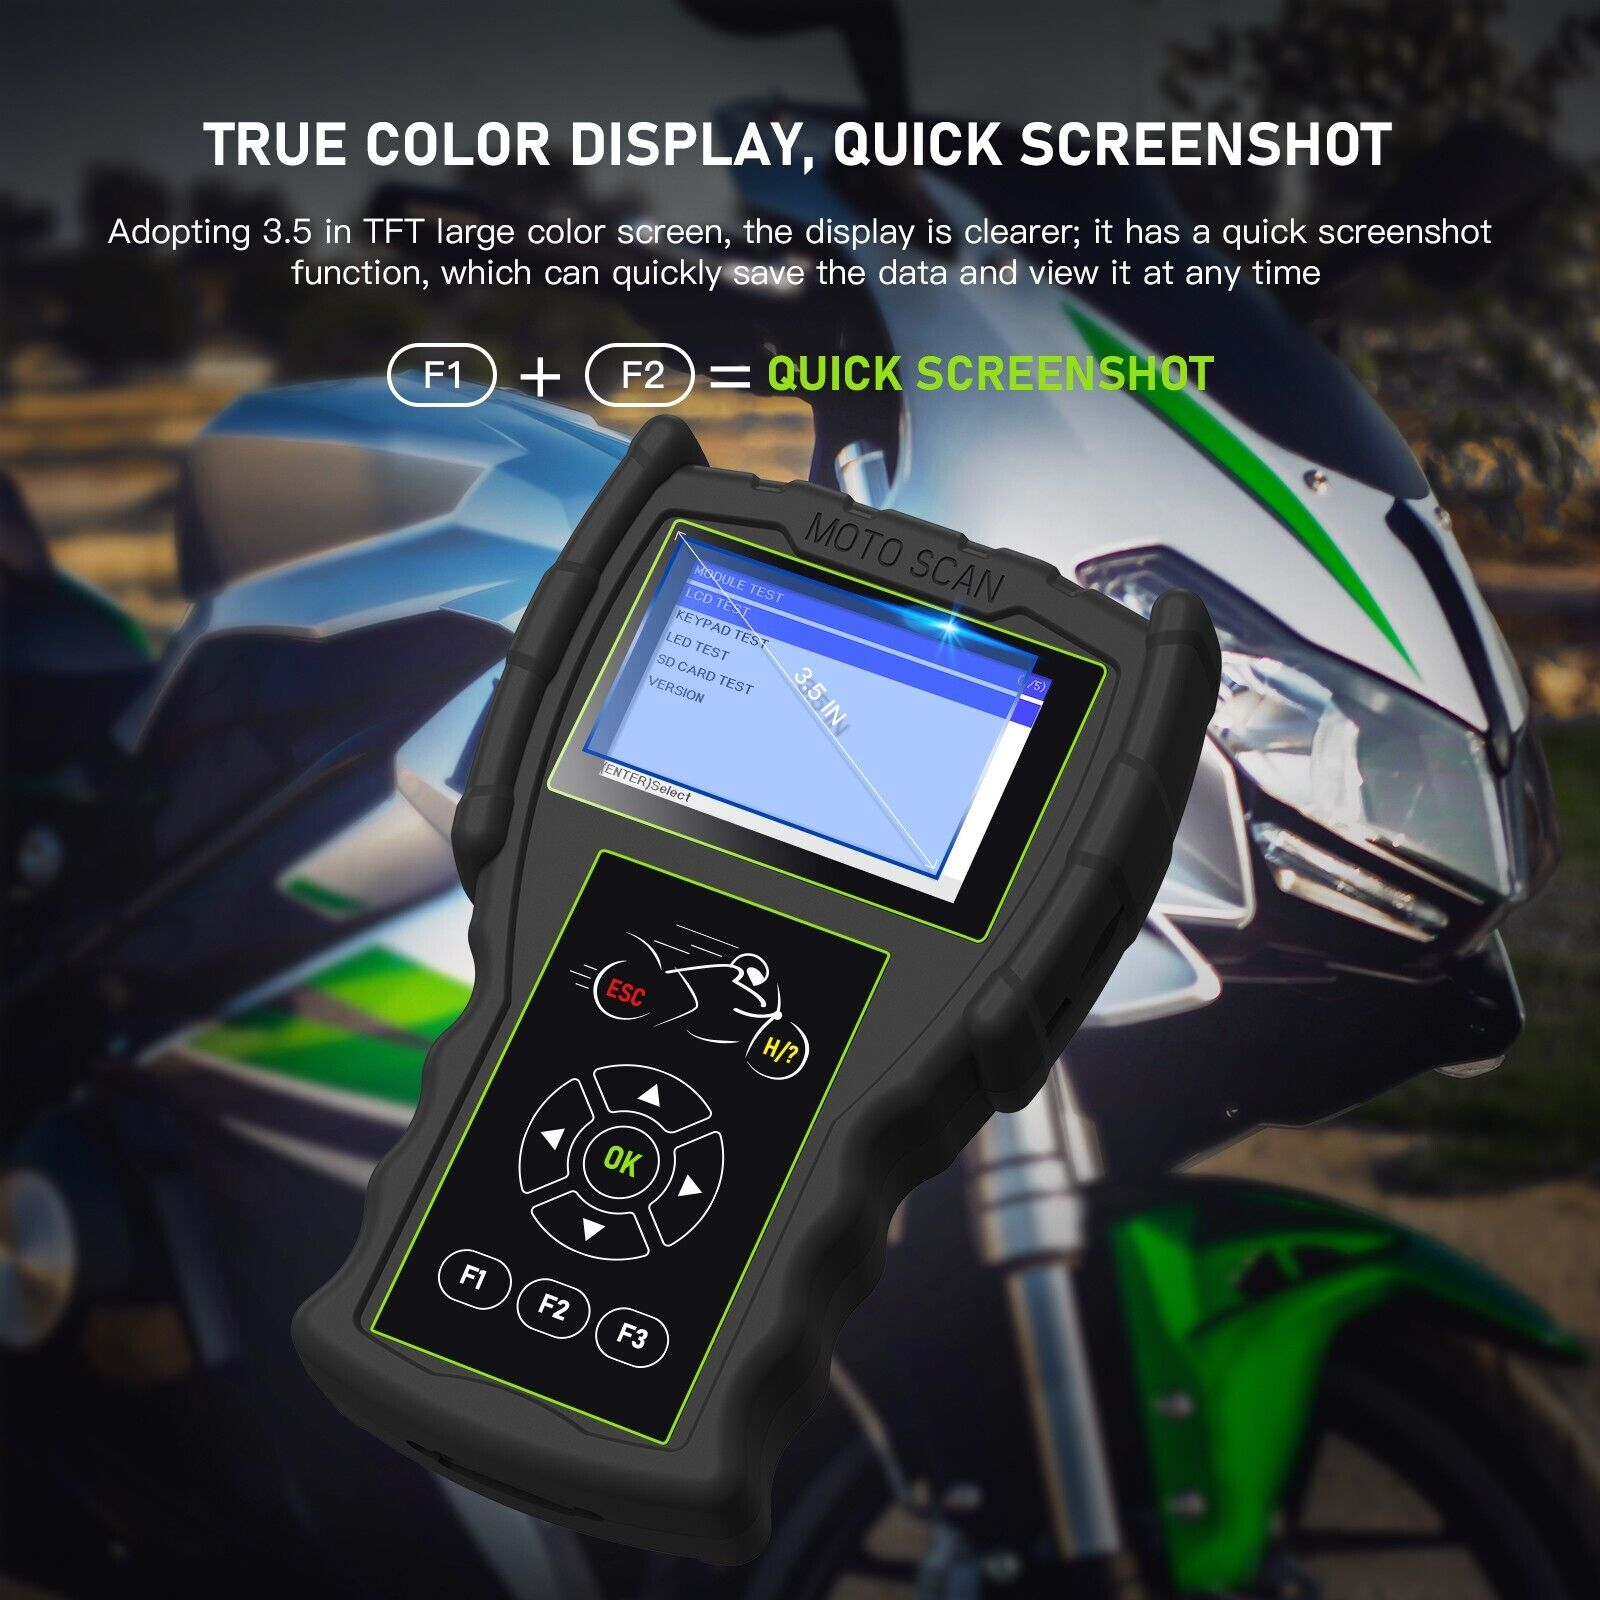 JDiag M100 Pro Motorcycle Diagnostic Scanner OBD2 Fault Diagnostic Too -  Elite Biker's Accessories